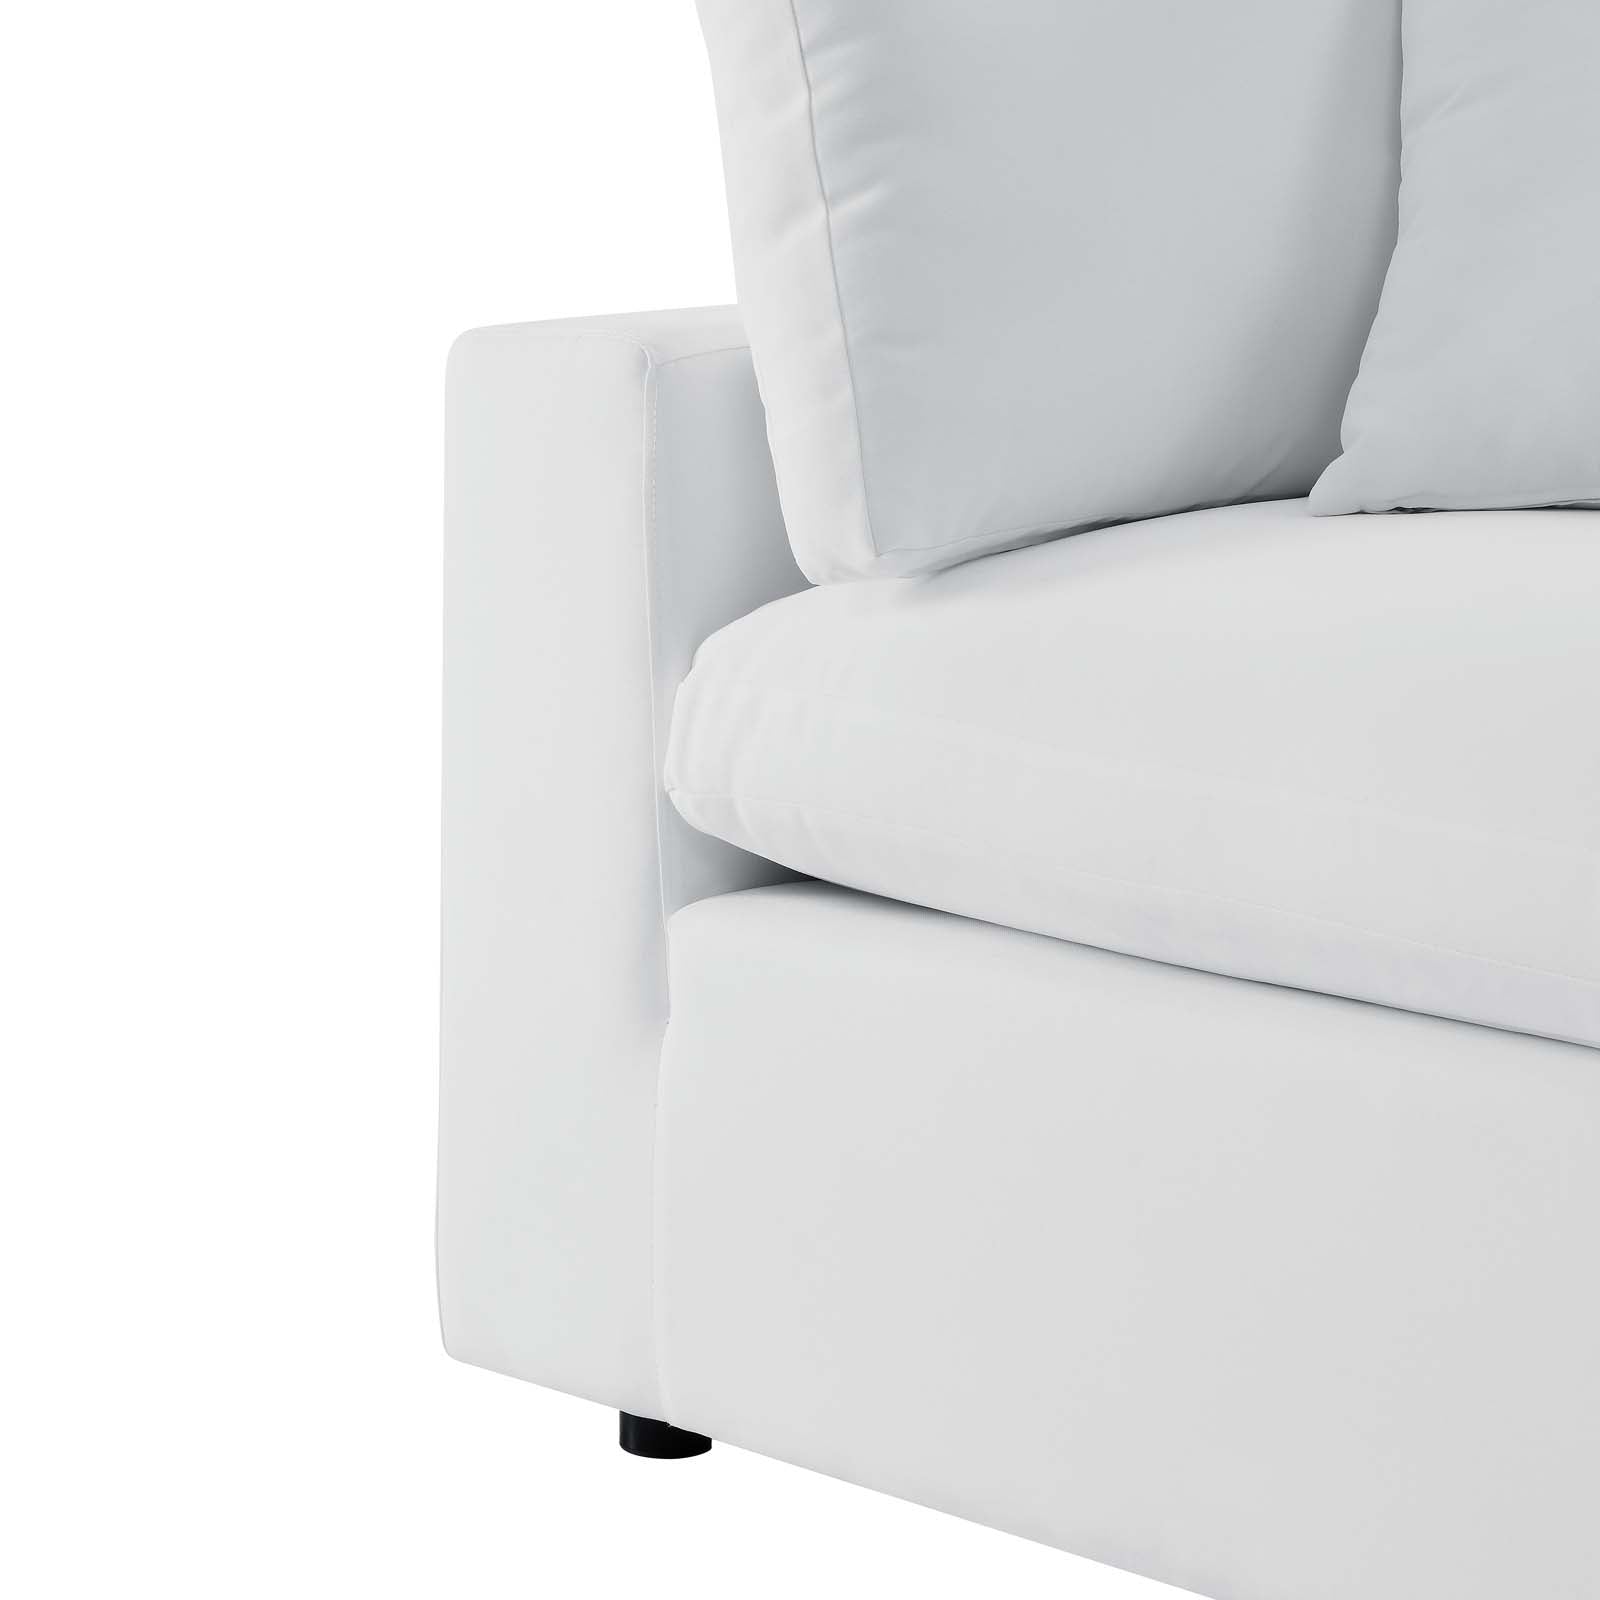 Modway Outdoor Sofas - Commix 4-Piece Sunbrella Outdoor Patio Sectional Sofa White